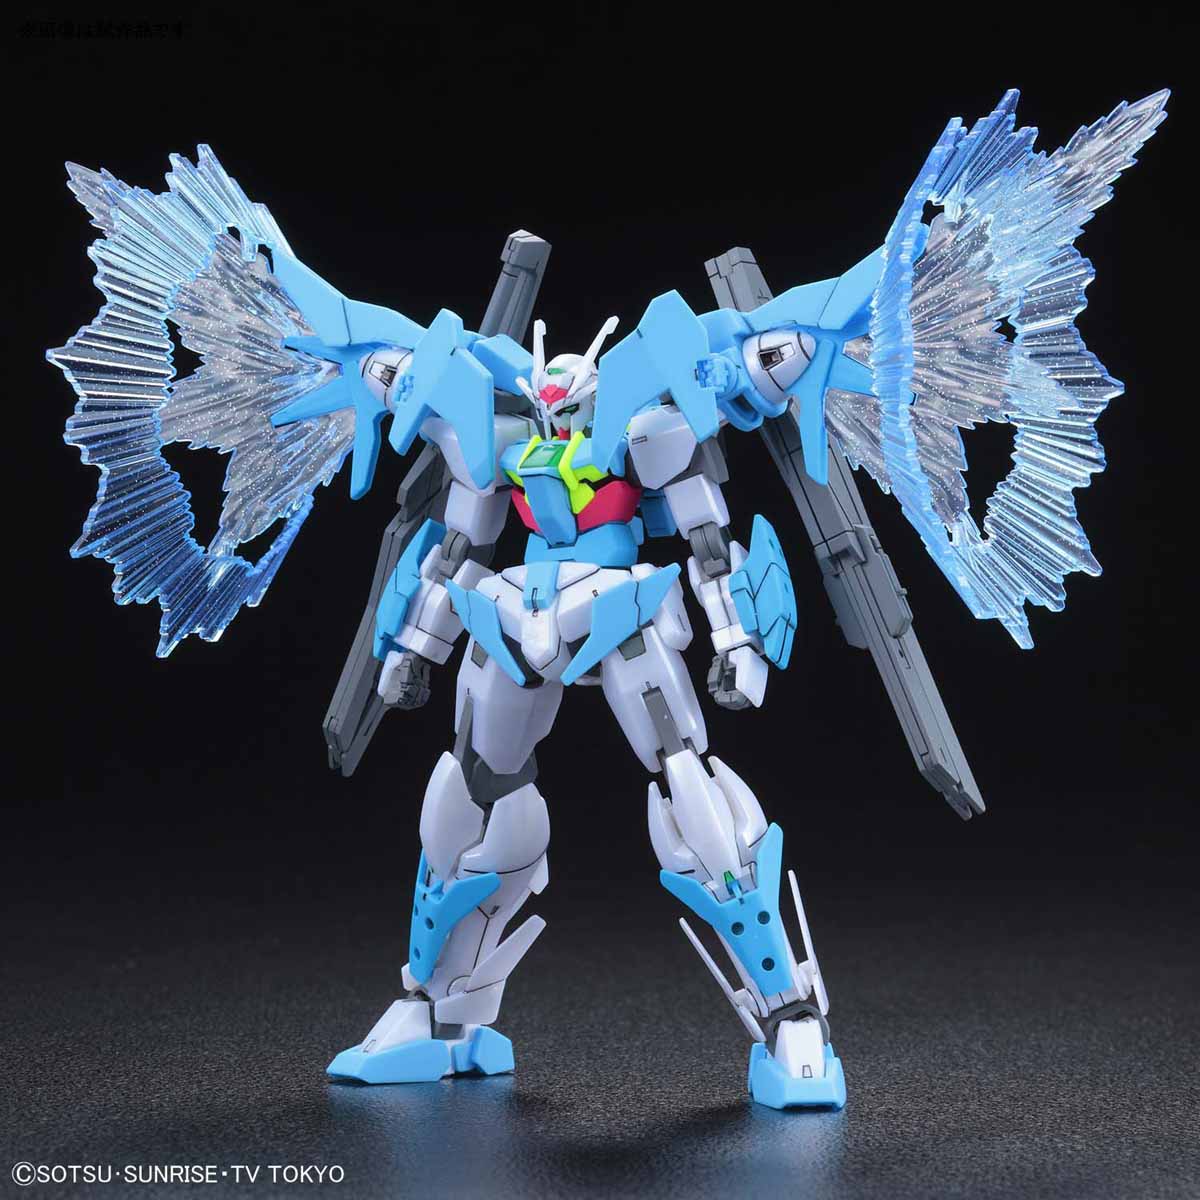 Gundam 00 Sky (Higher Than Skyphase)